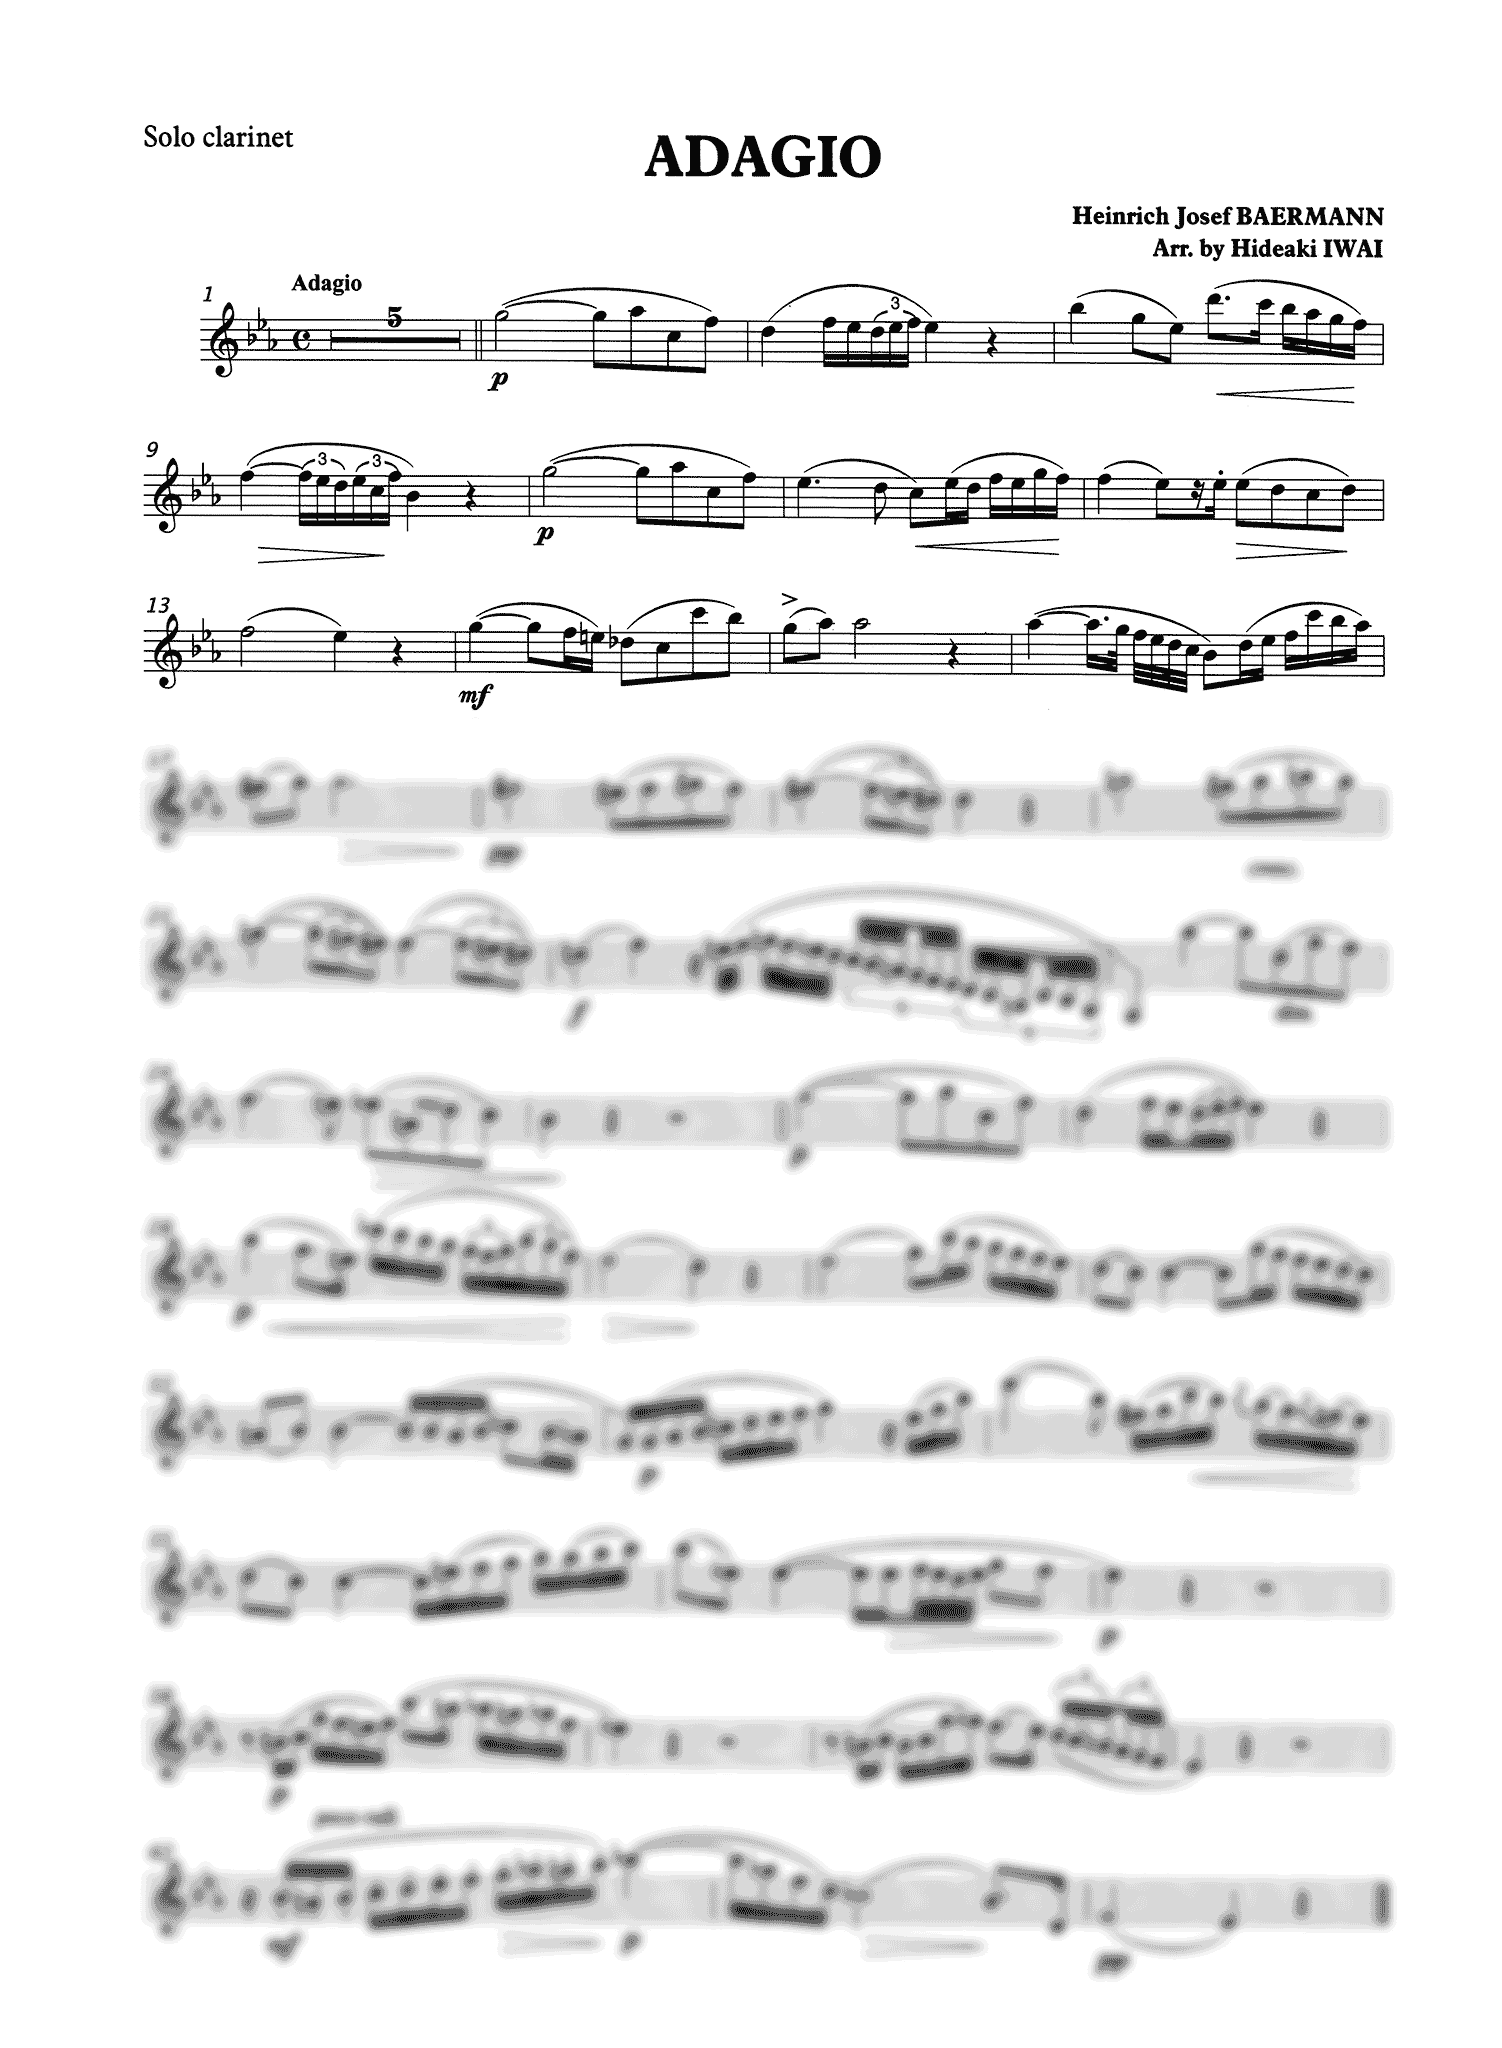 Baermann Adagio, from Op. 23 Solo Clarinet part